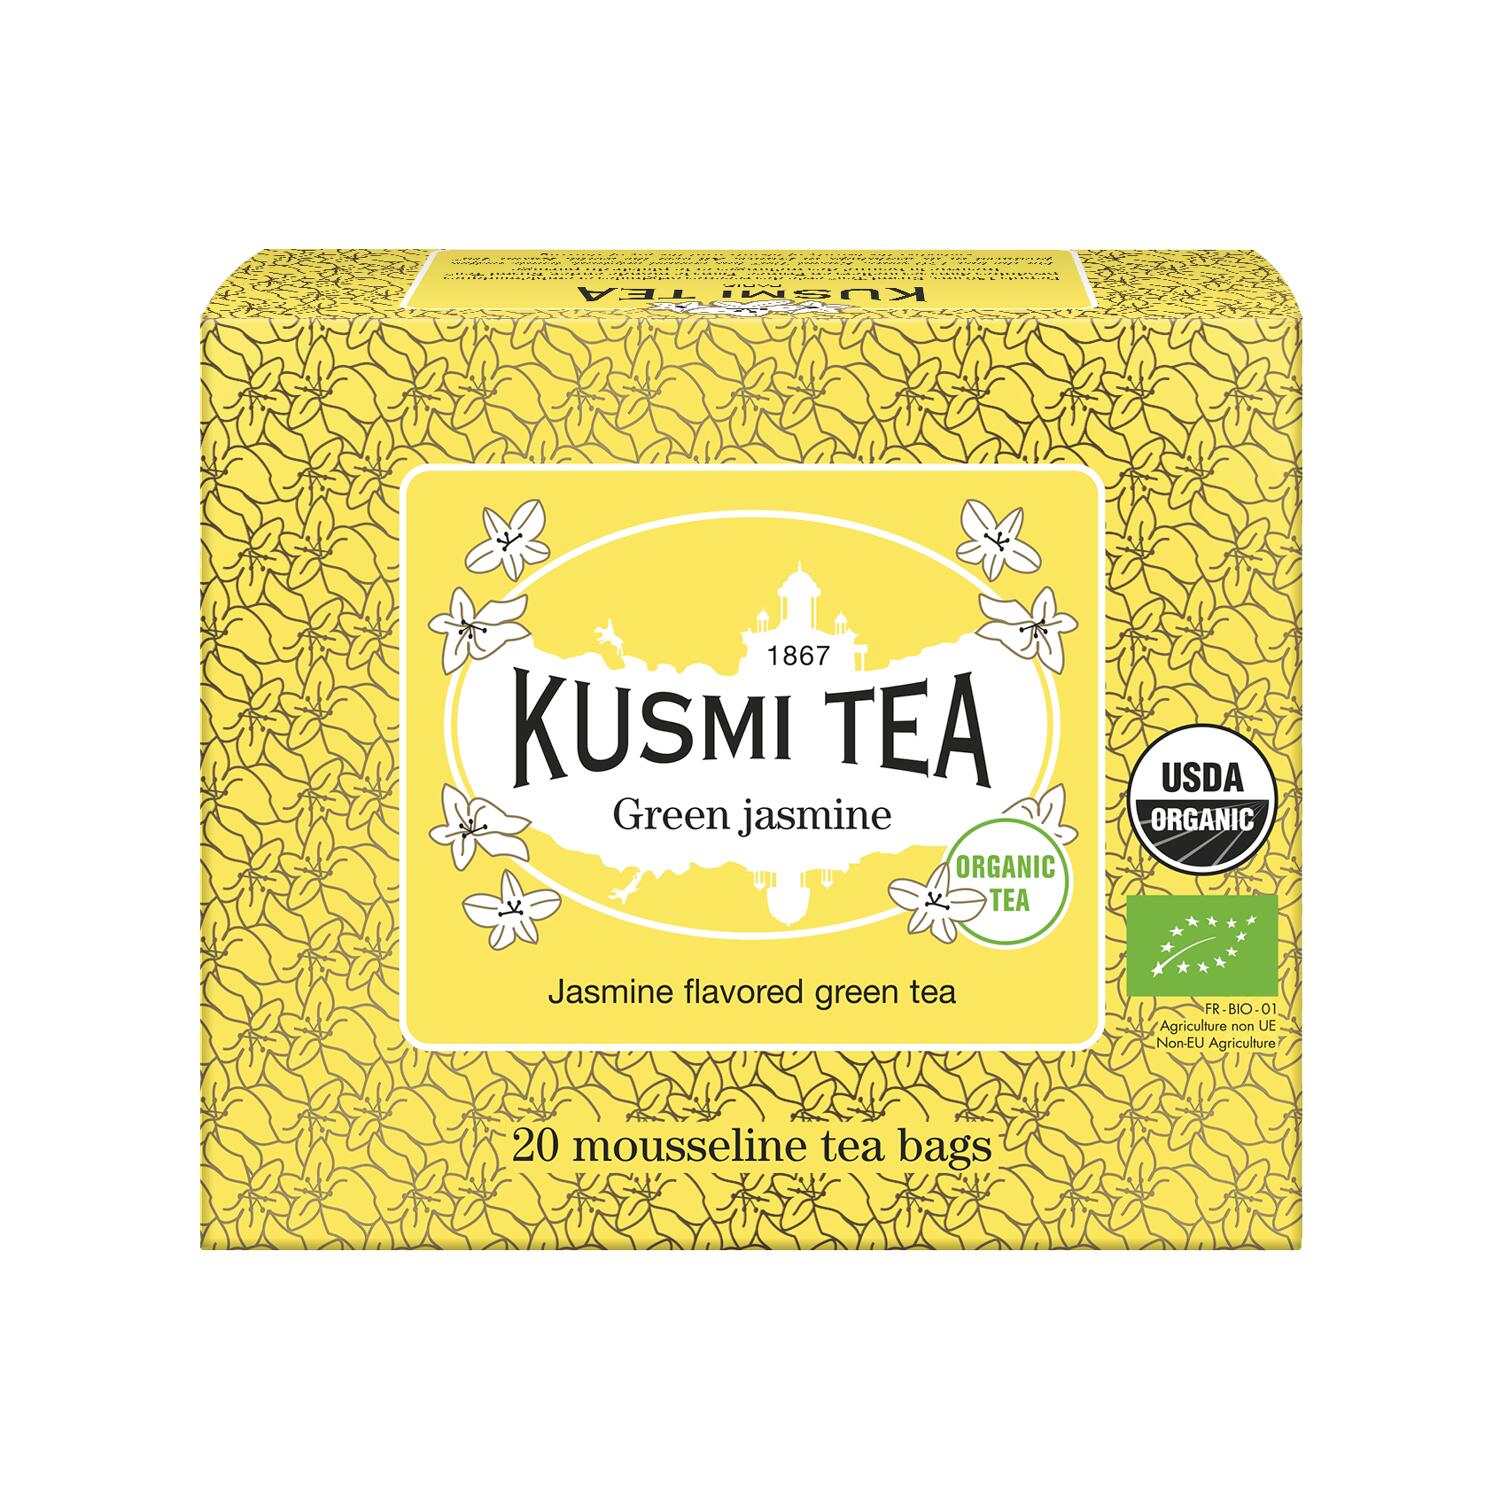 Spearmint green tea (Organic) - Kusmi Tea